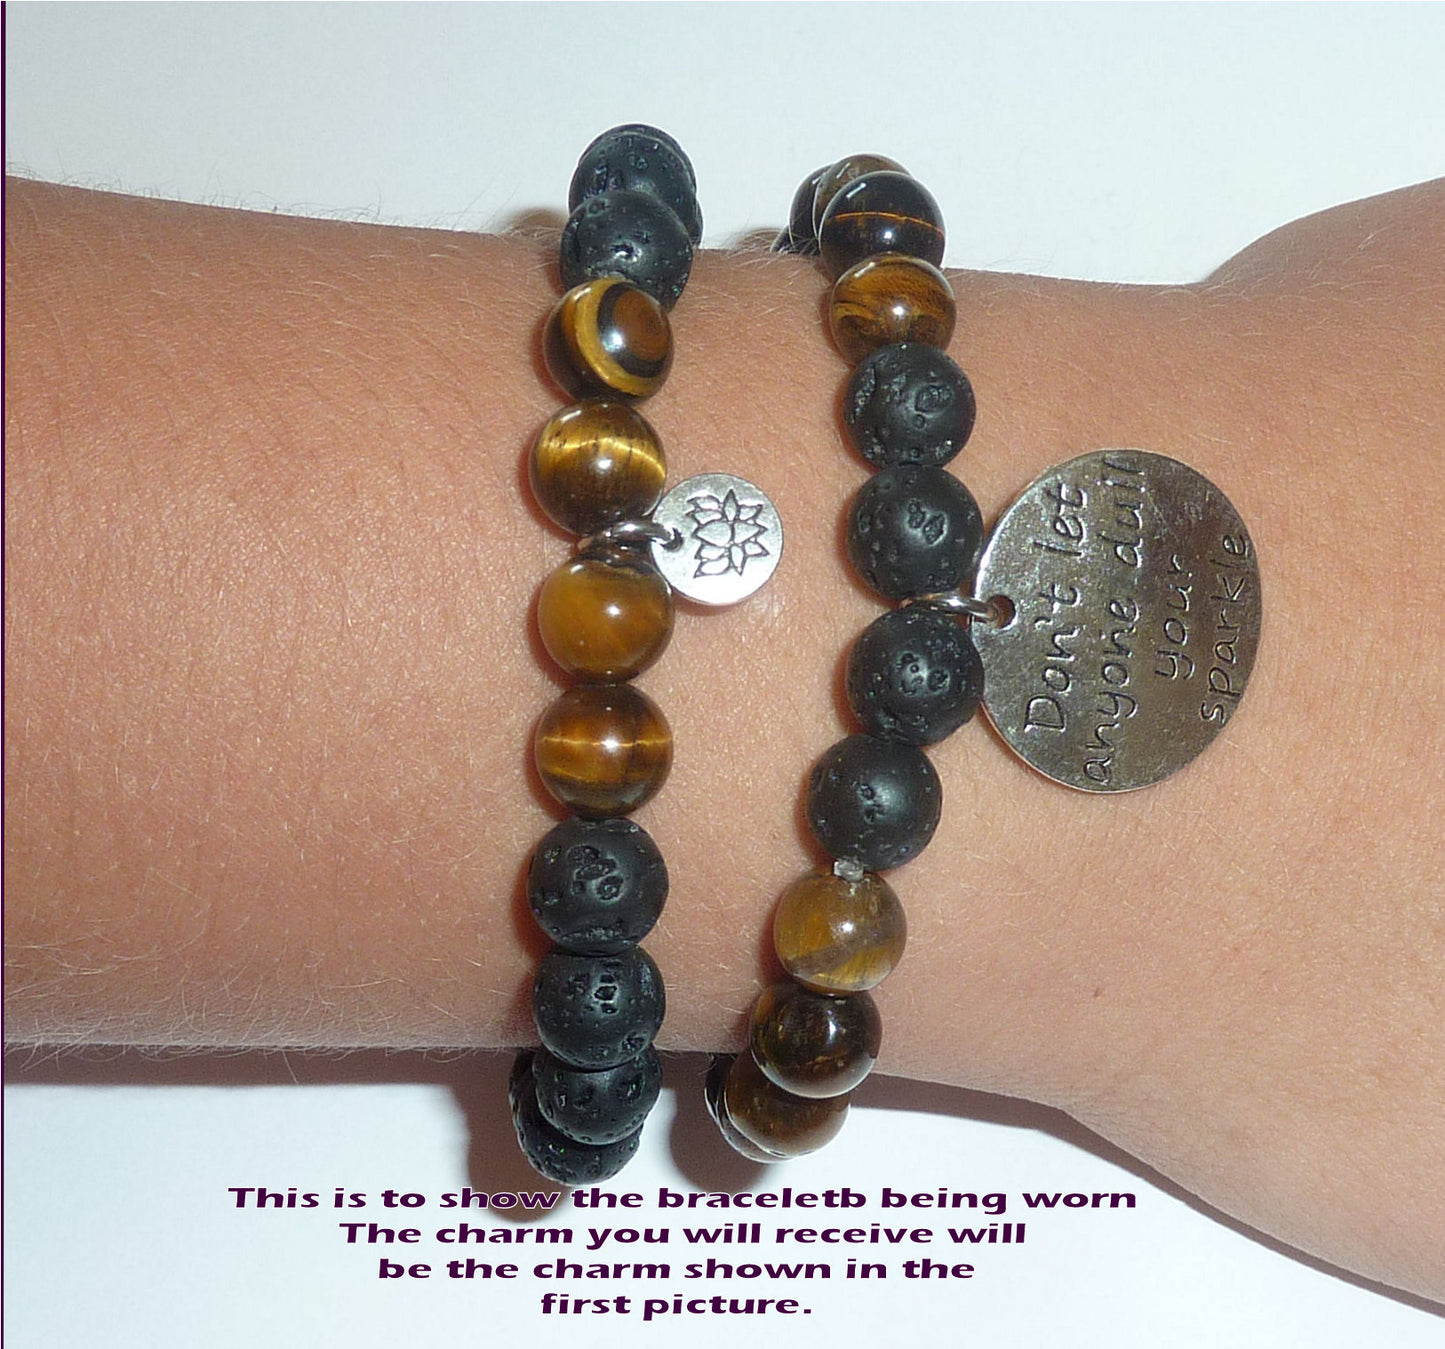 Flower - Women's Tiger Eye & Black Lava Diffuser Yoga Beads Charm Stretch Bracelet Gift Set